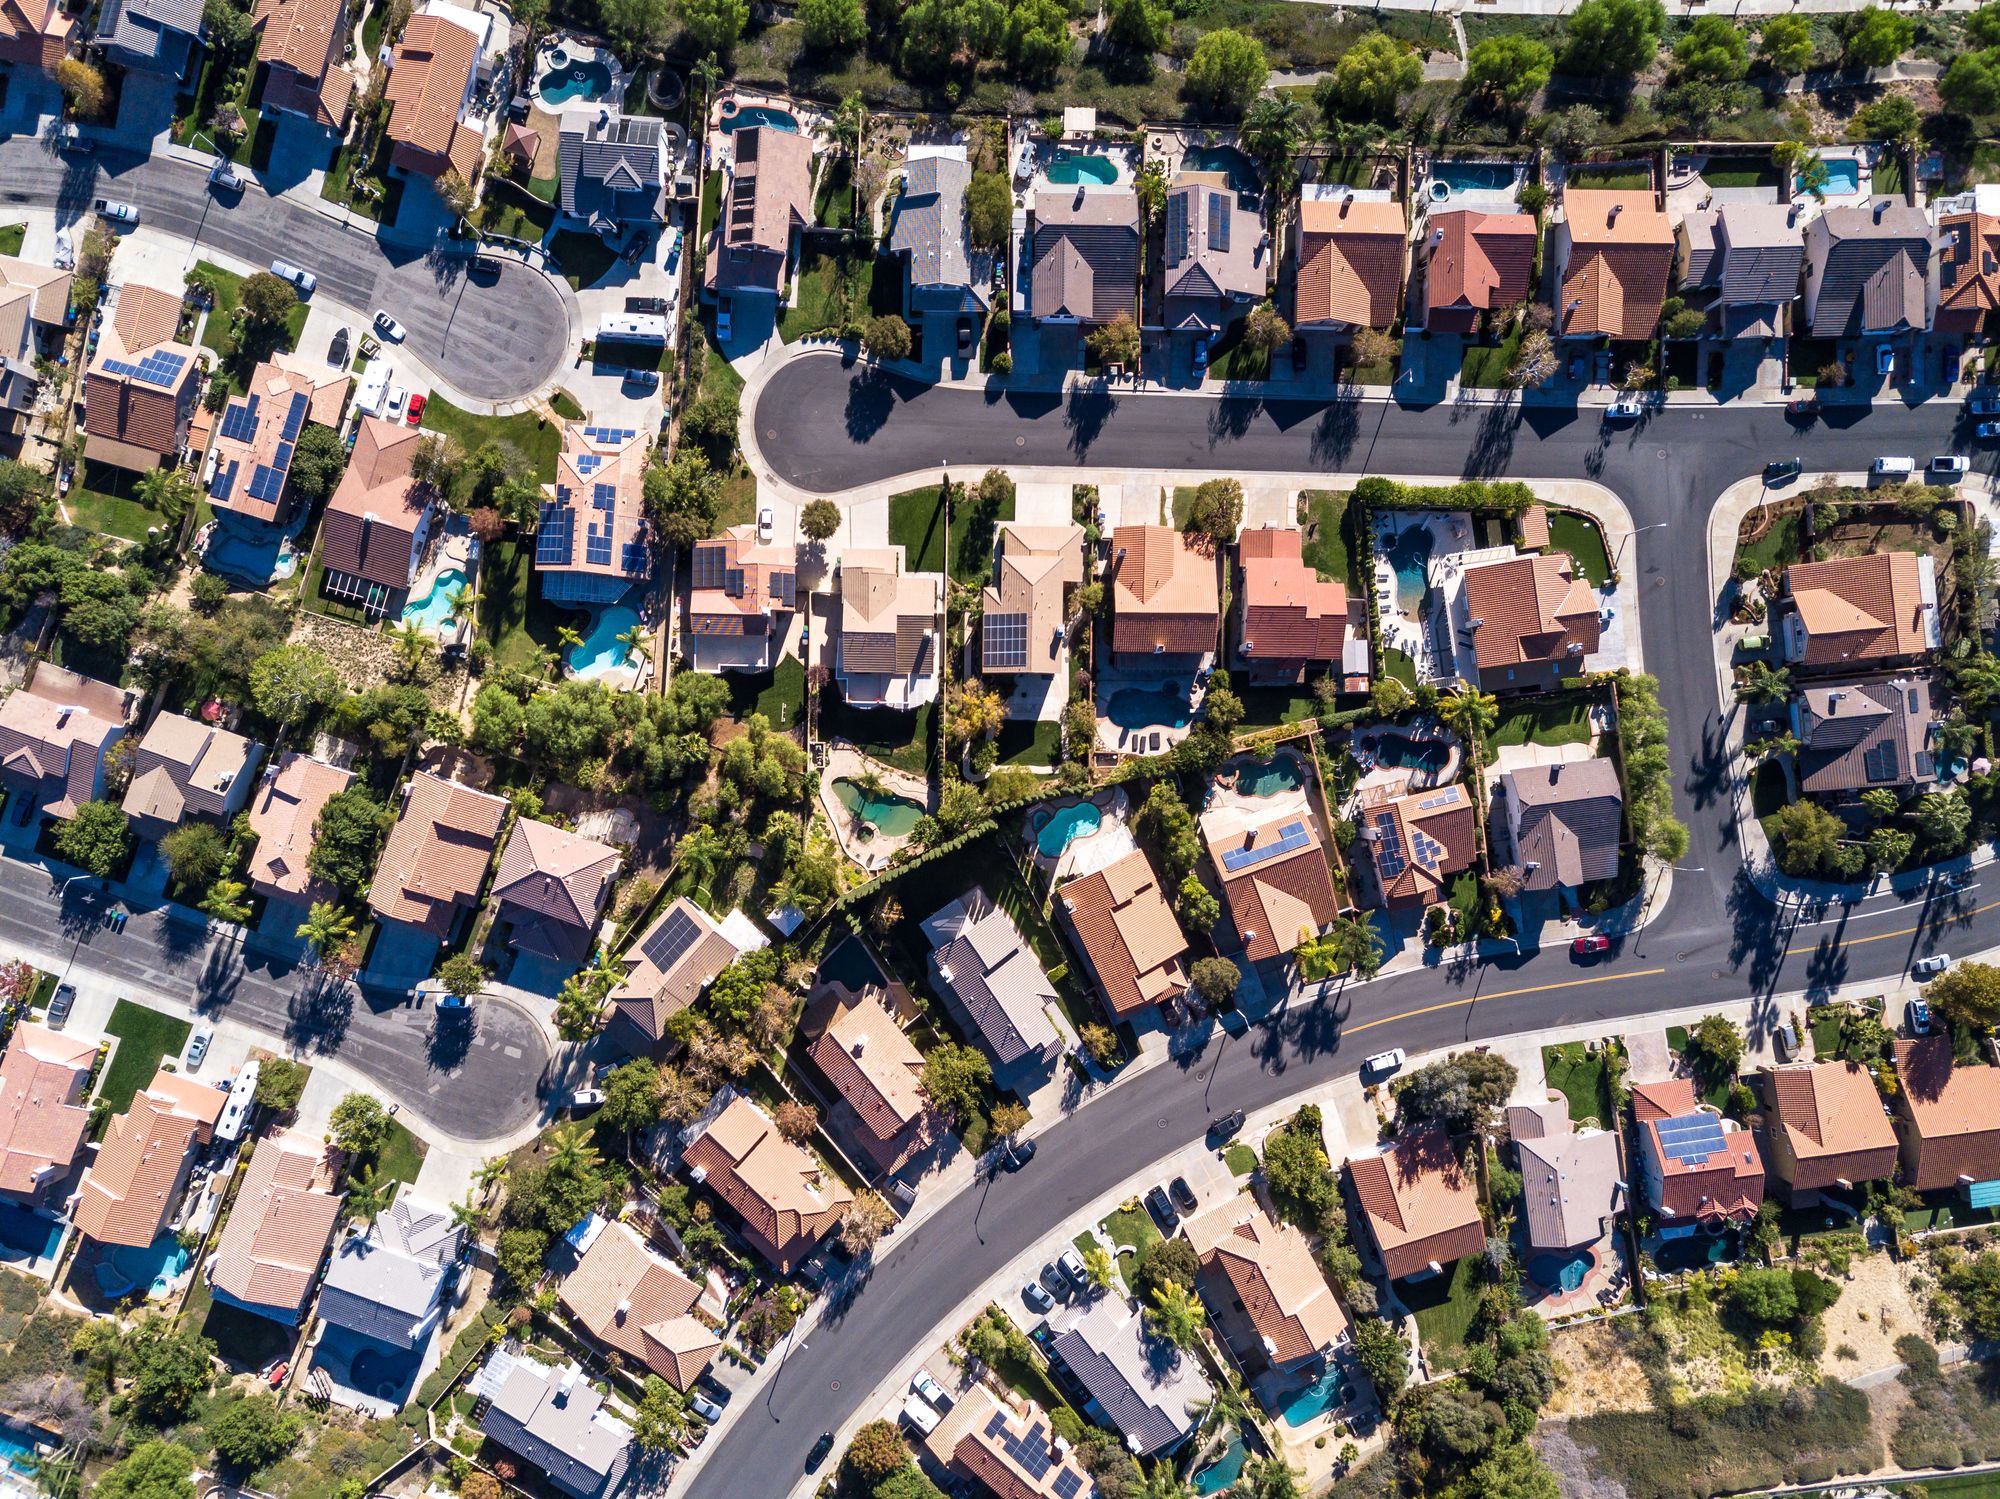 Photo of a California subdivision